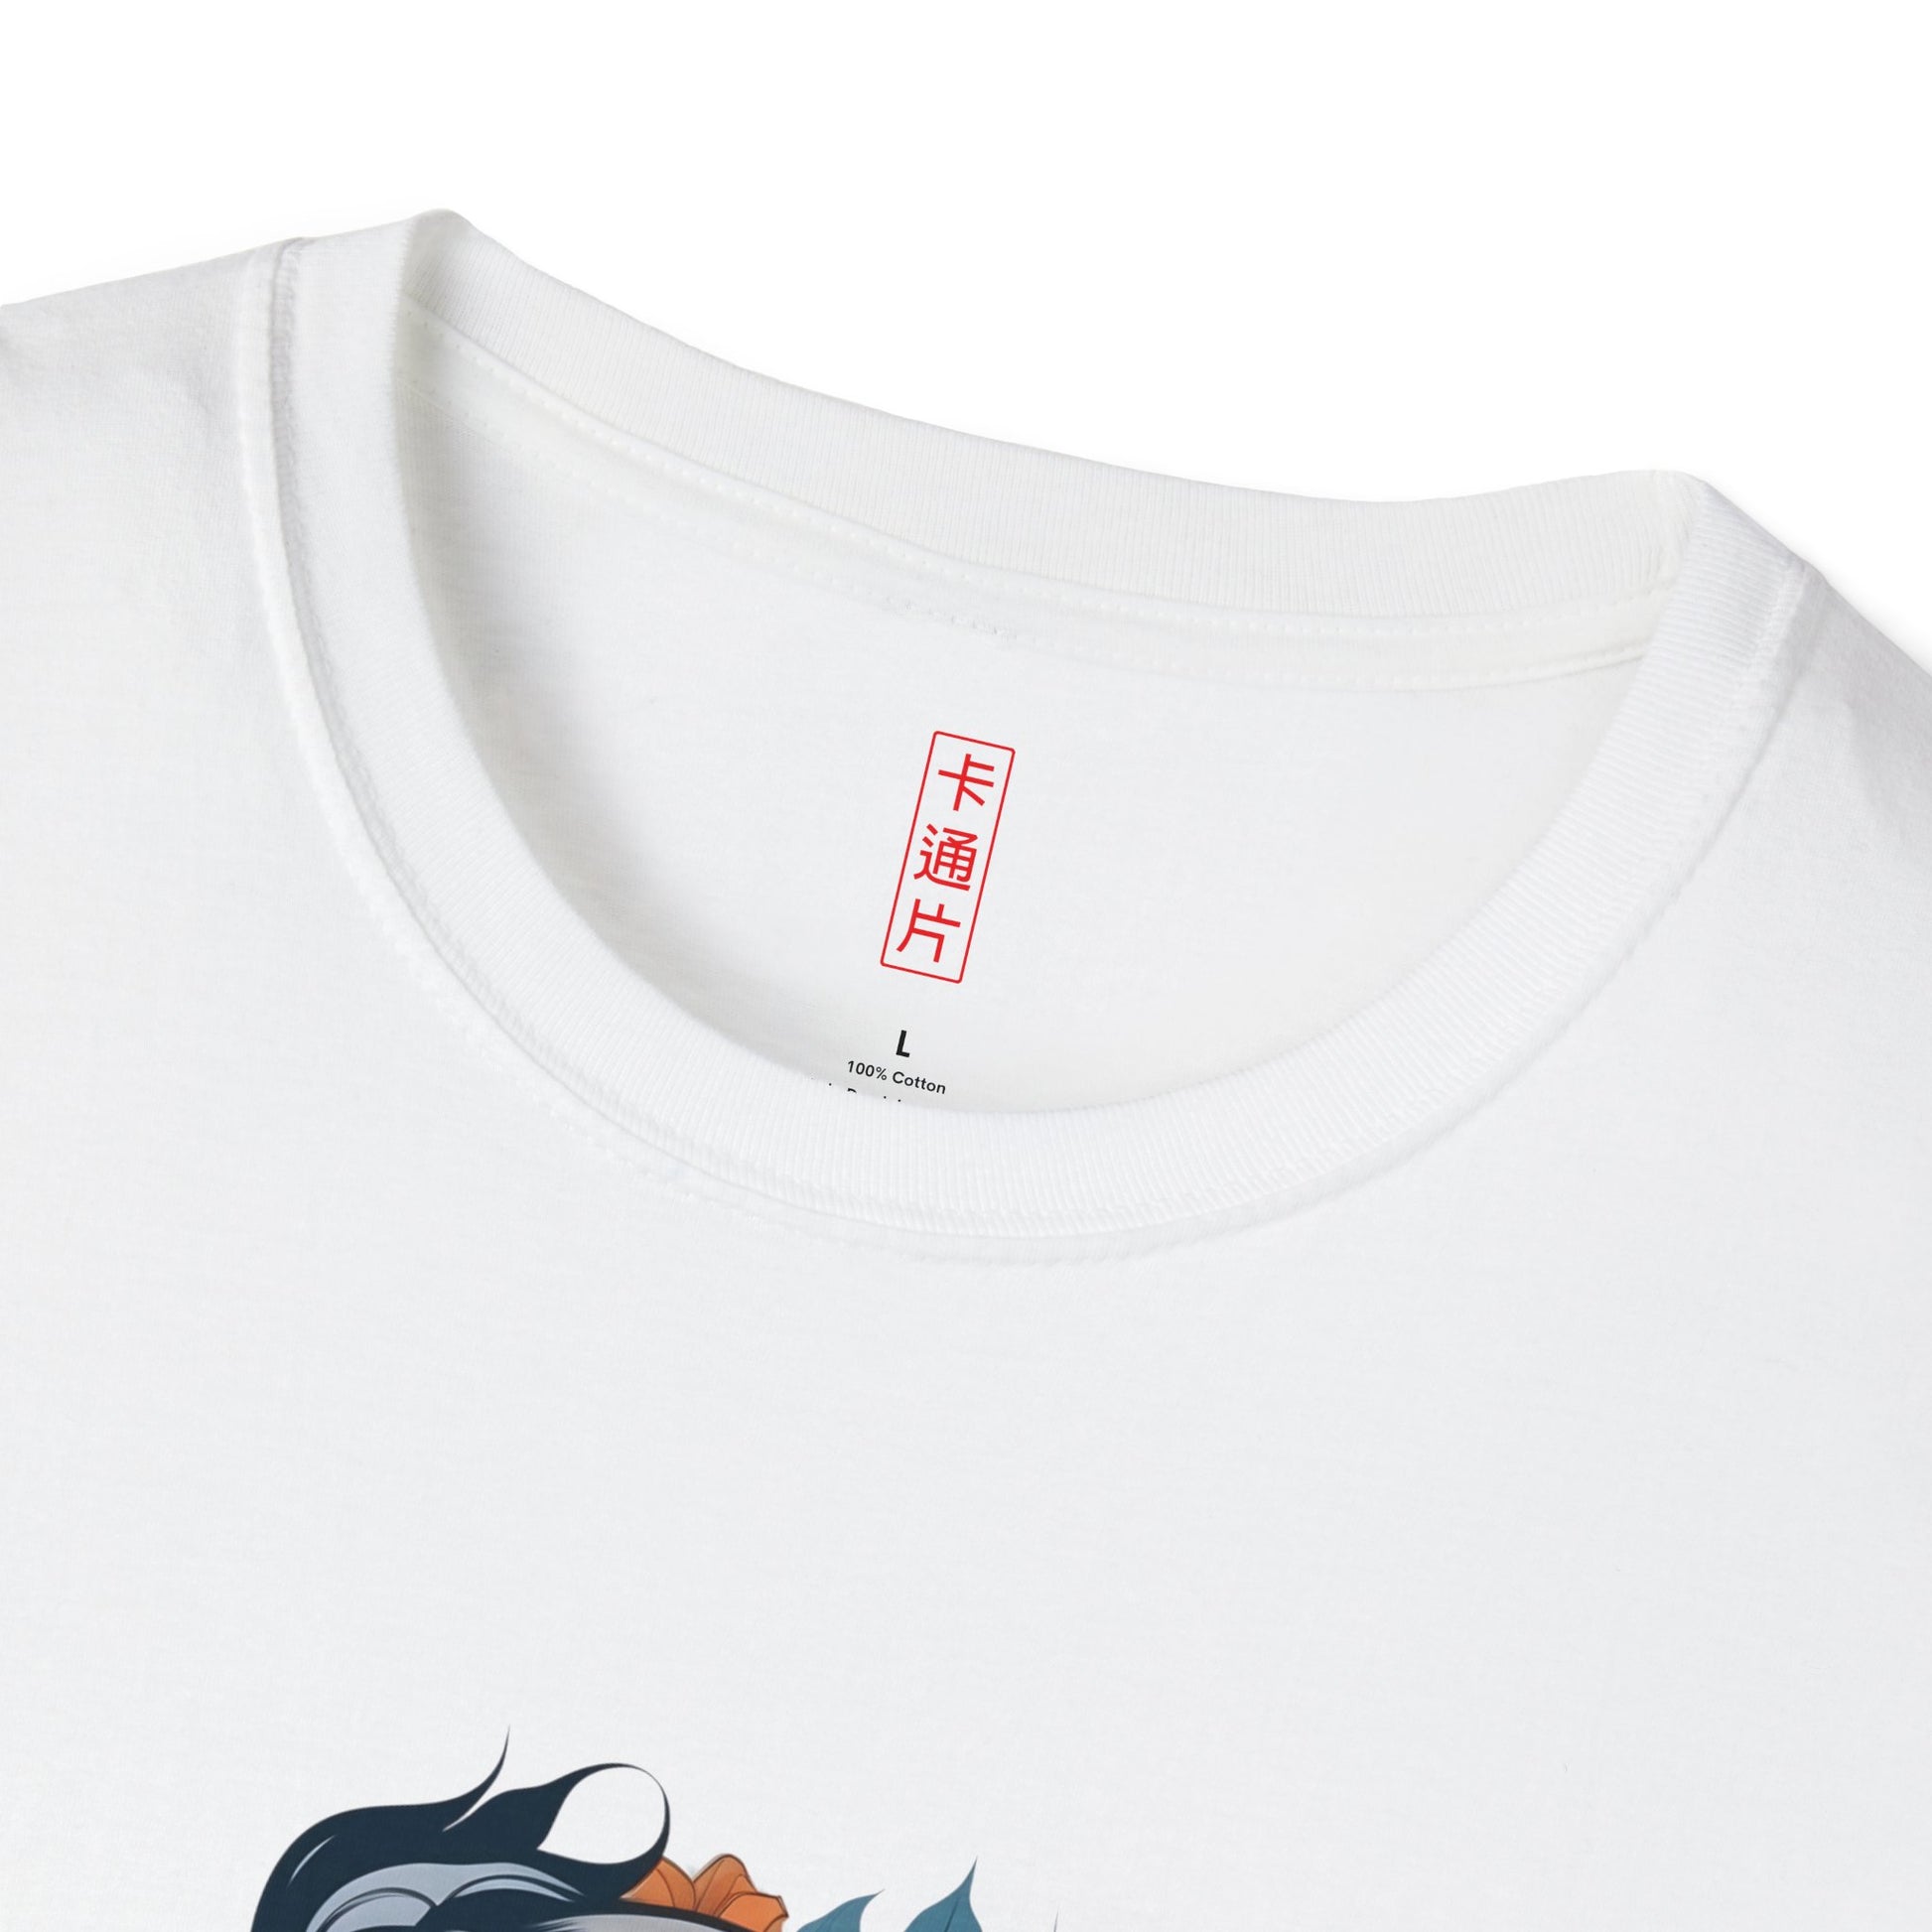 Kǎtōng Piàn - California Love Collection - 012 - Unisex Softstyle T-Shirt Printify